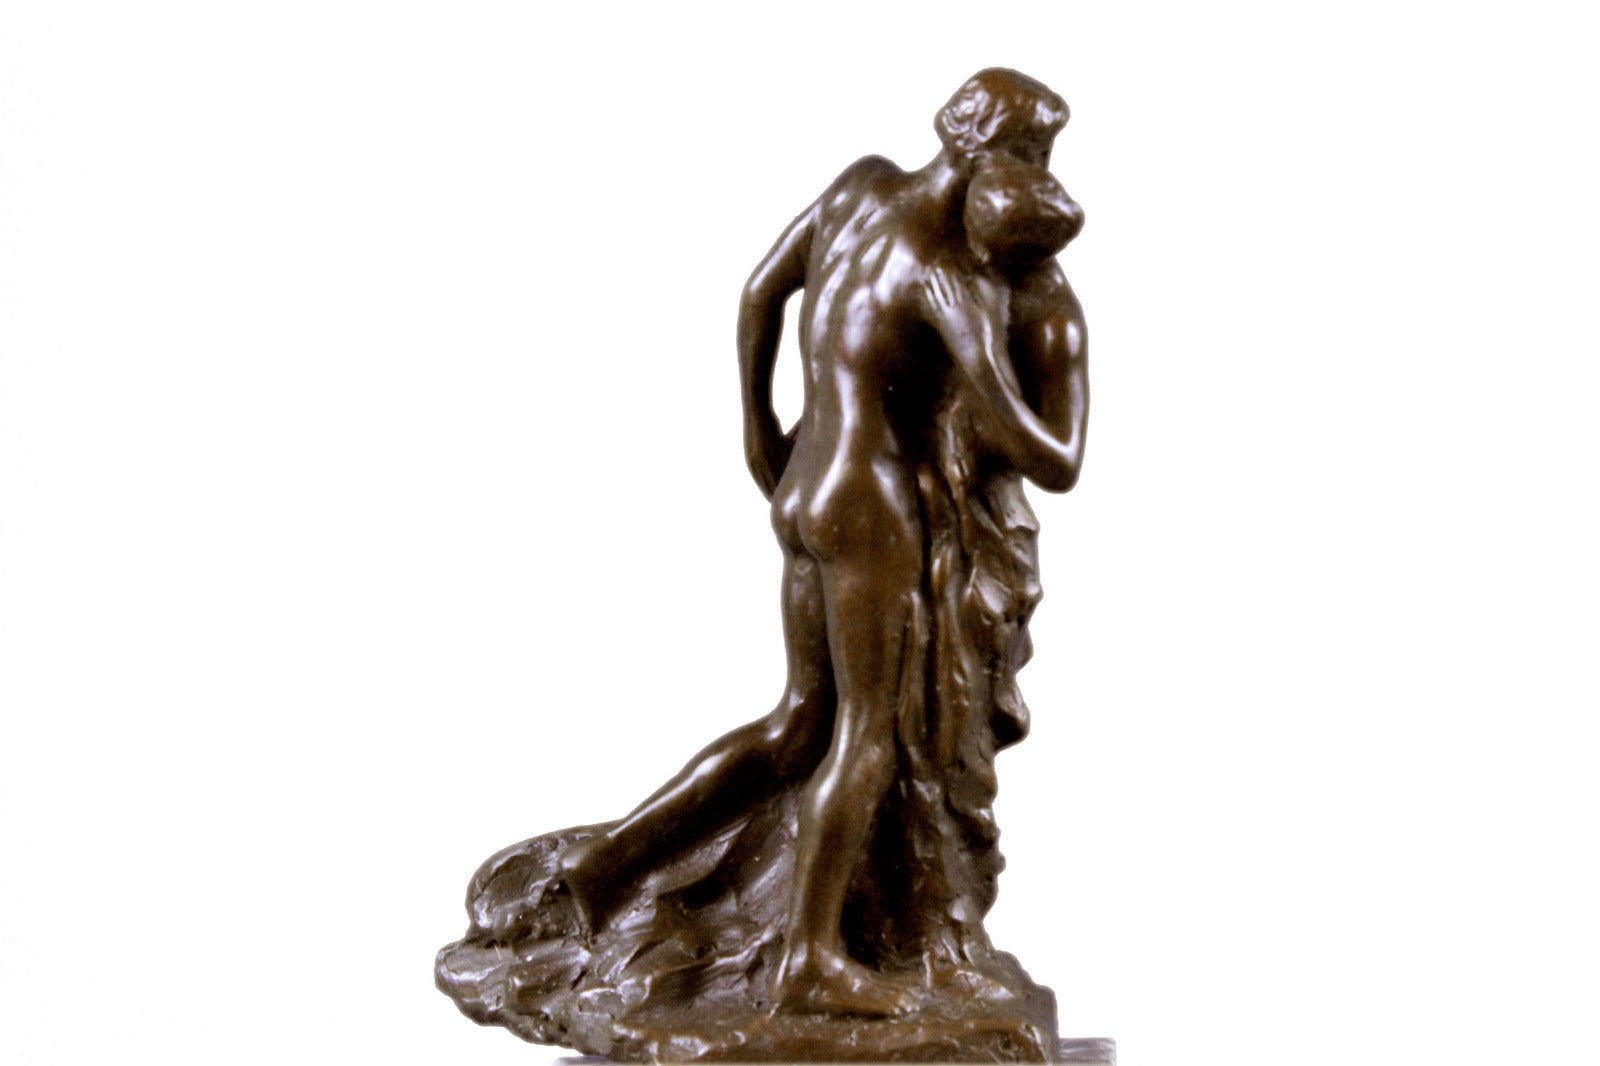 Hand Made Statue Eternal Idol By Rodin Nude Couple Bronze Sculpture Figurine Art